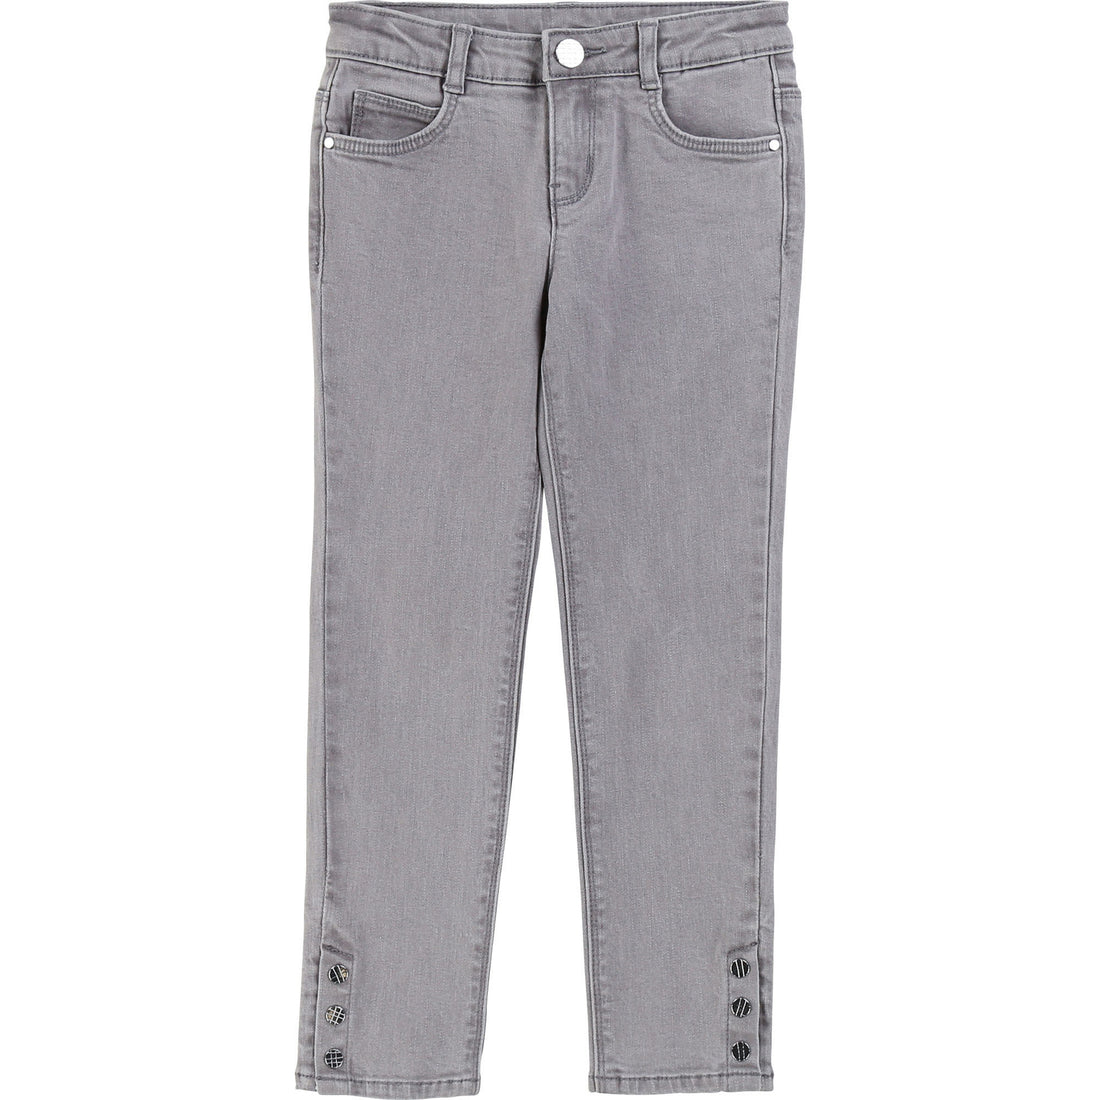 carrement-beau-denim-trousers-fall-2-denim-grey- (1)